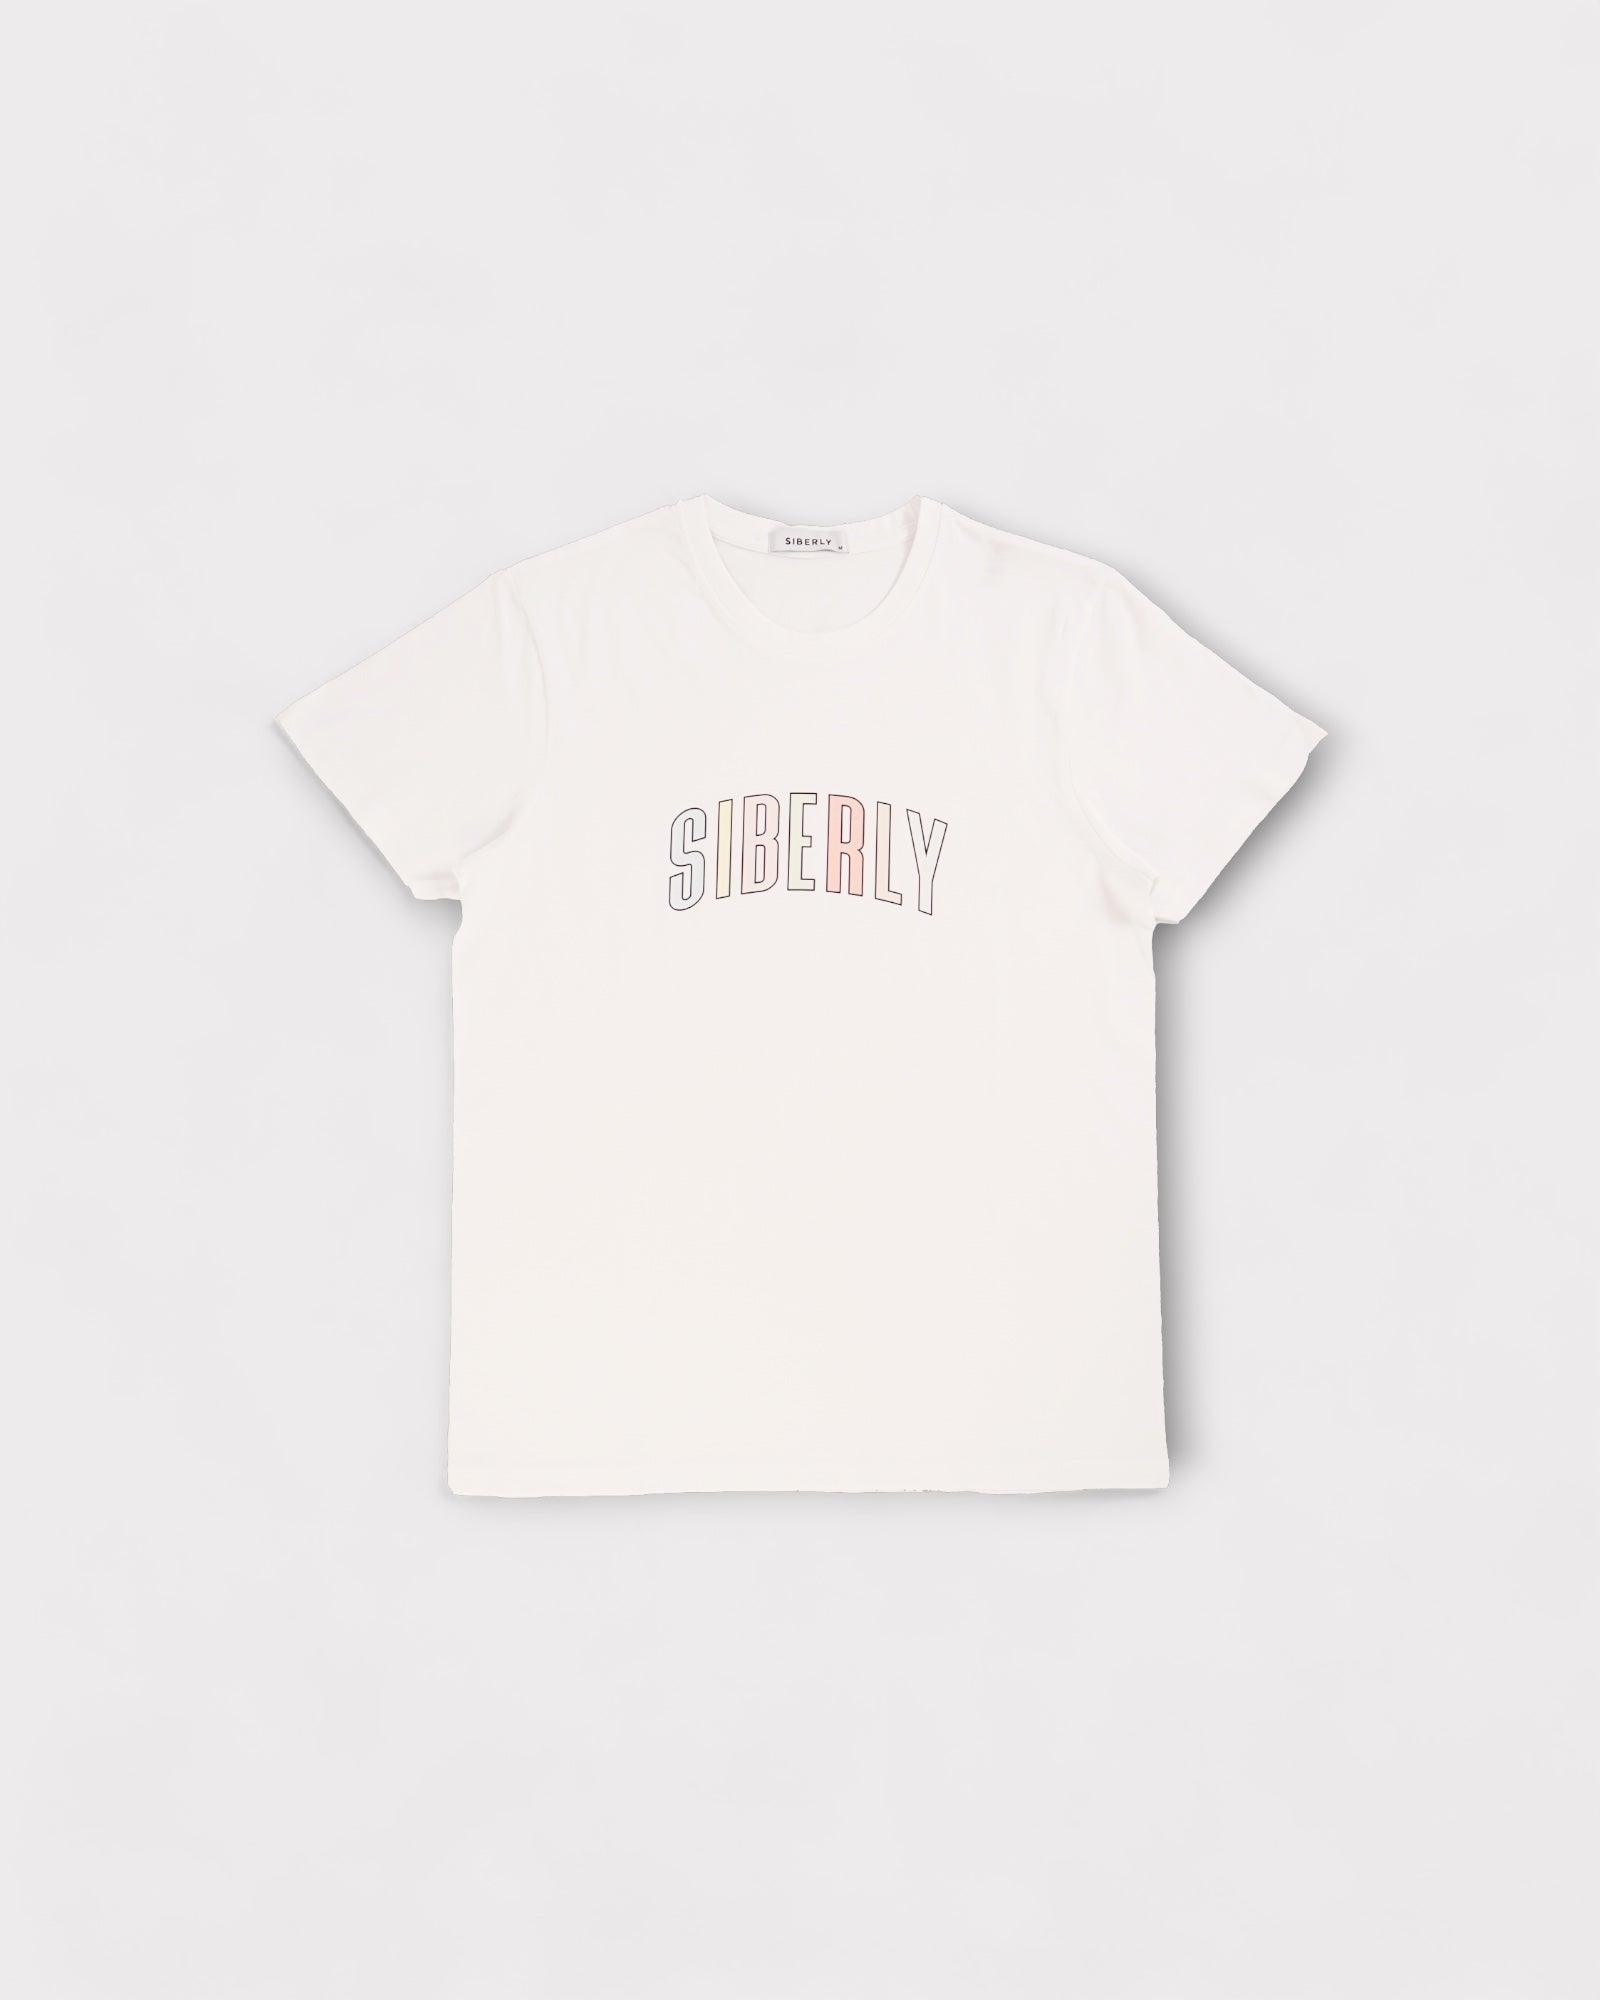 Camiseta siberly multicolor - Siberly Brand